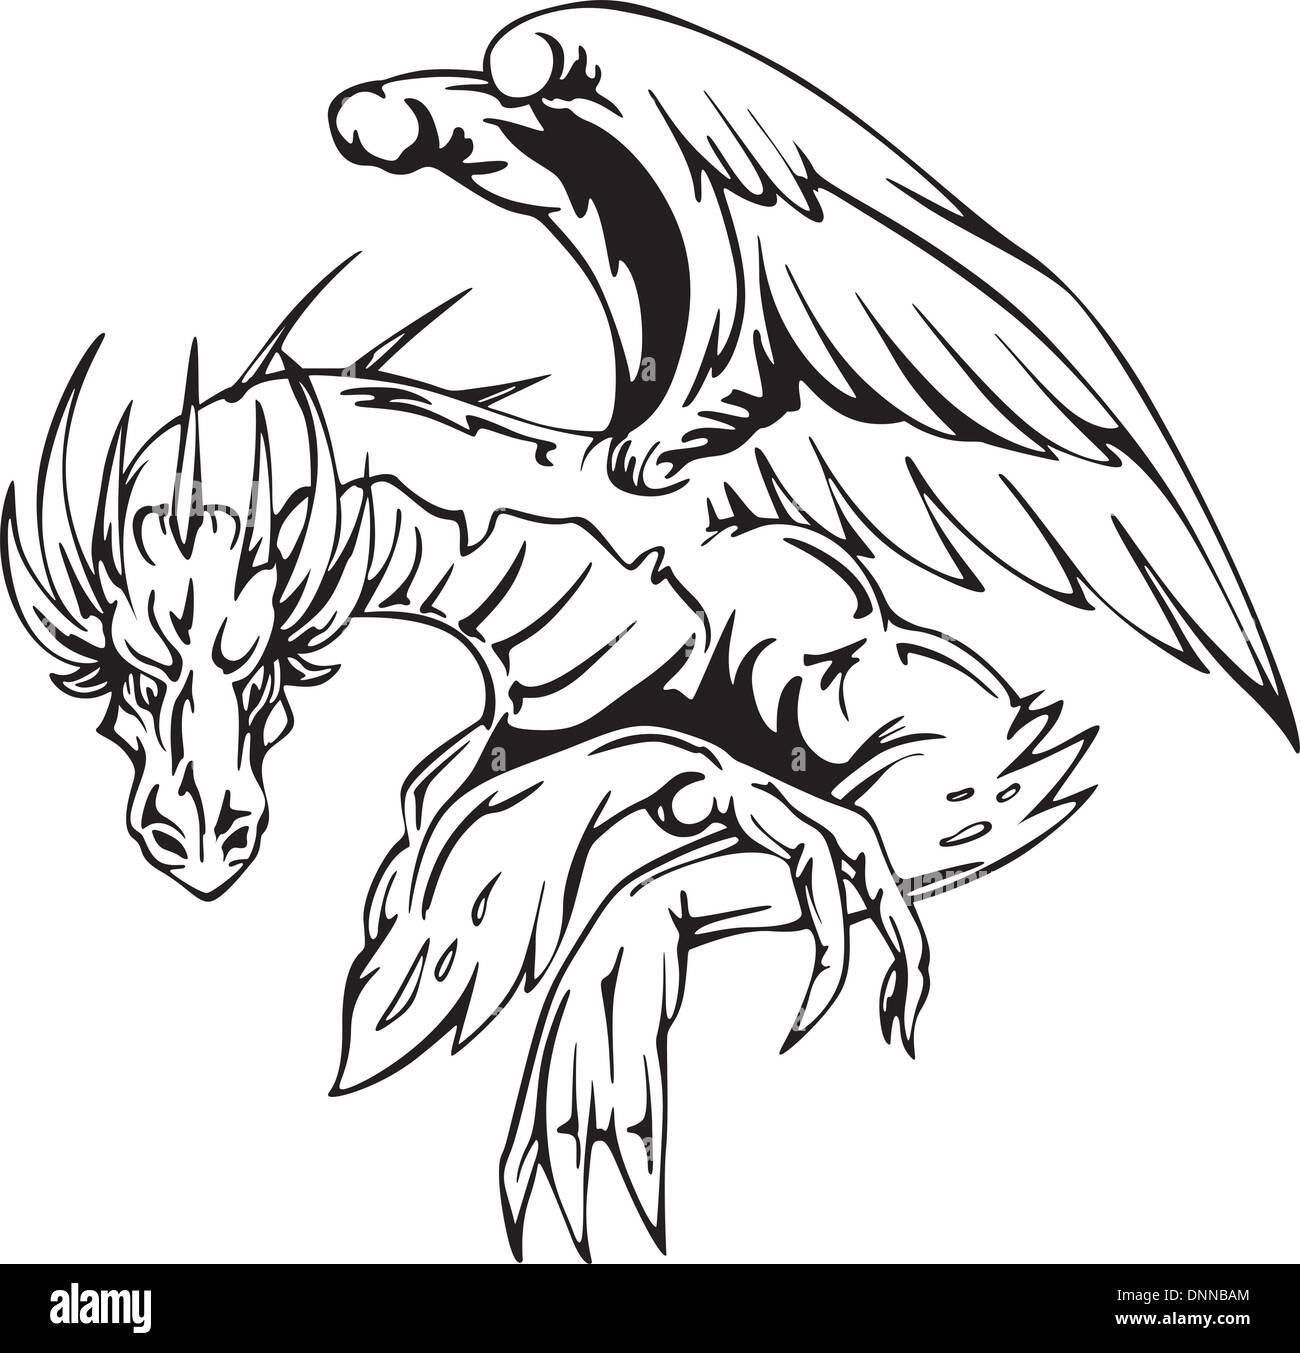 Dragon sitting - tattoo design. EPS vector illustration. Stock Vector